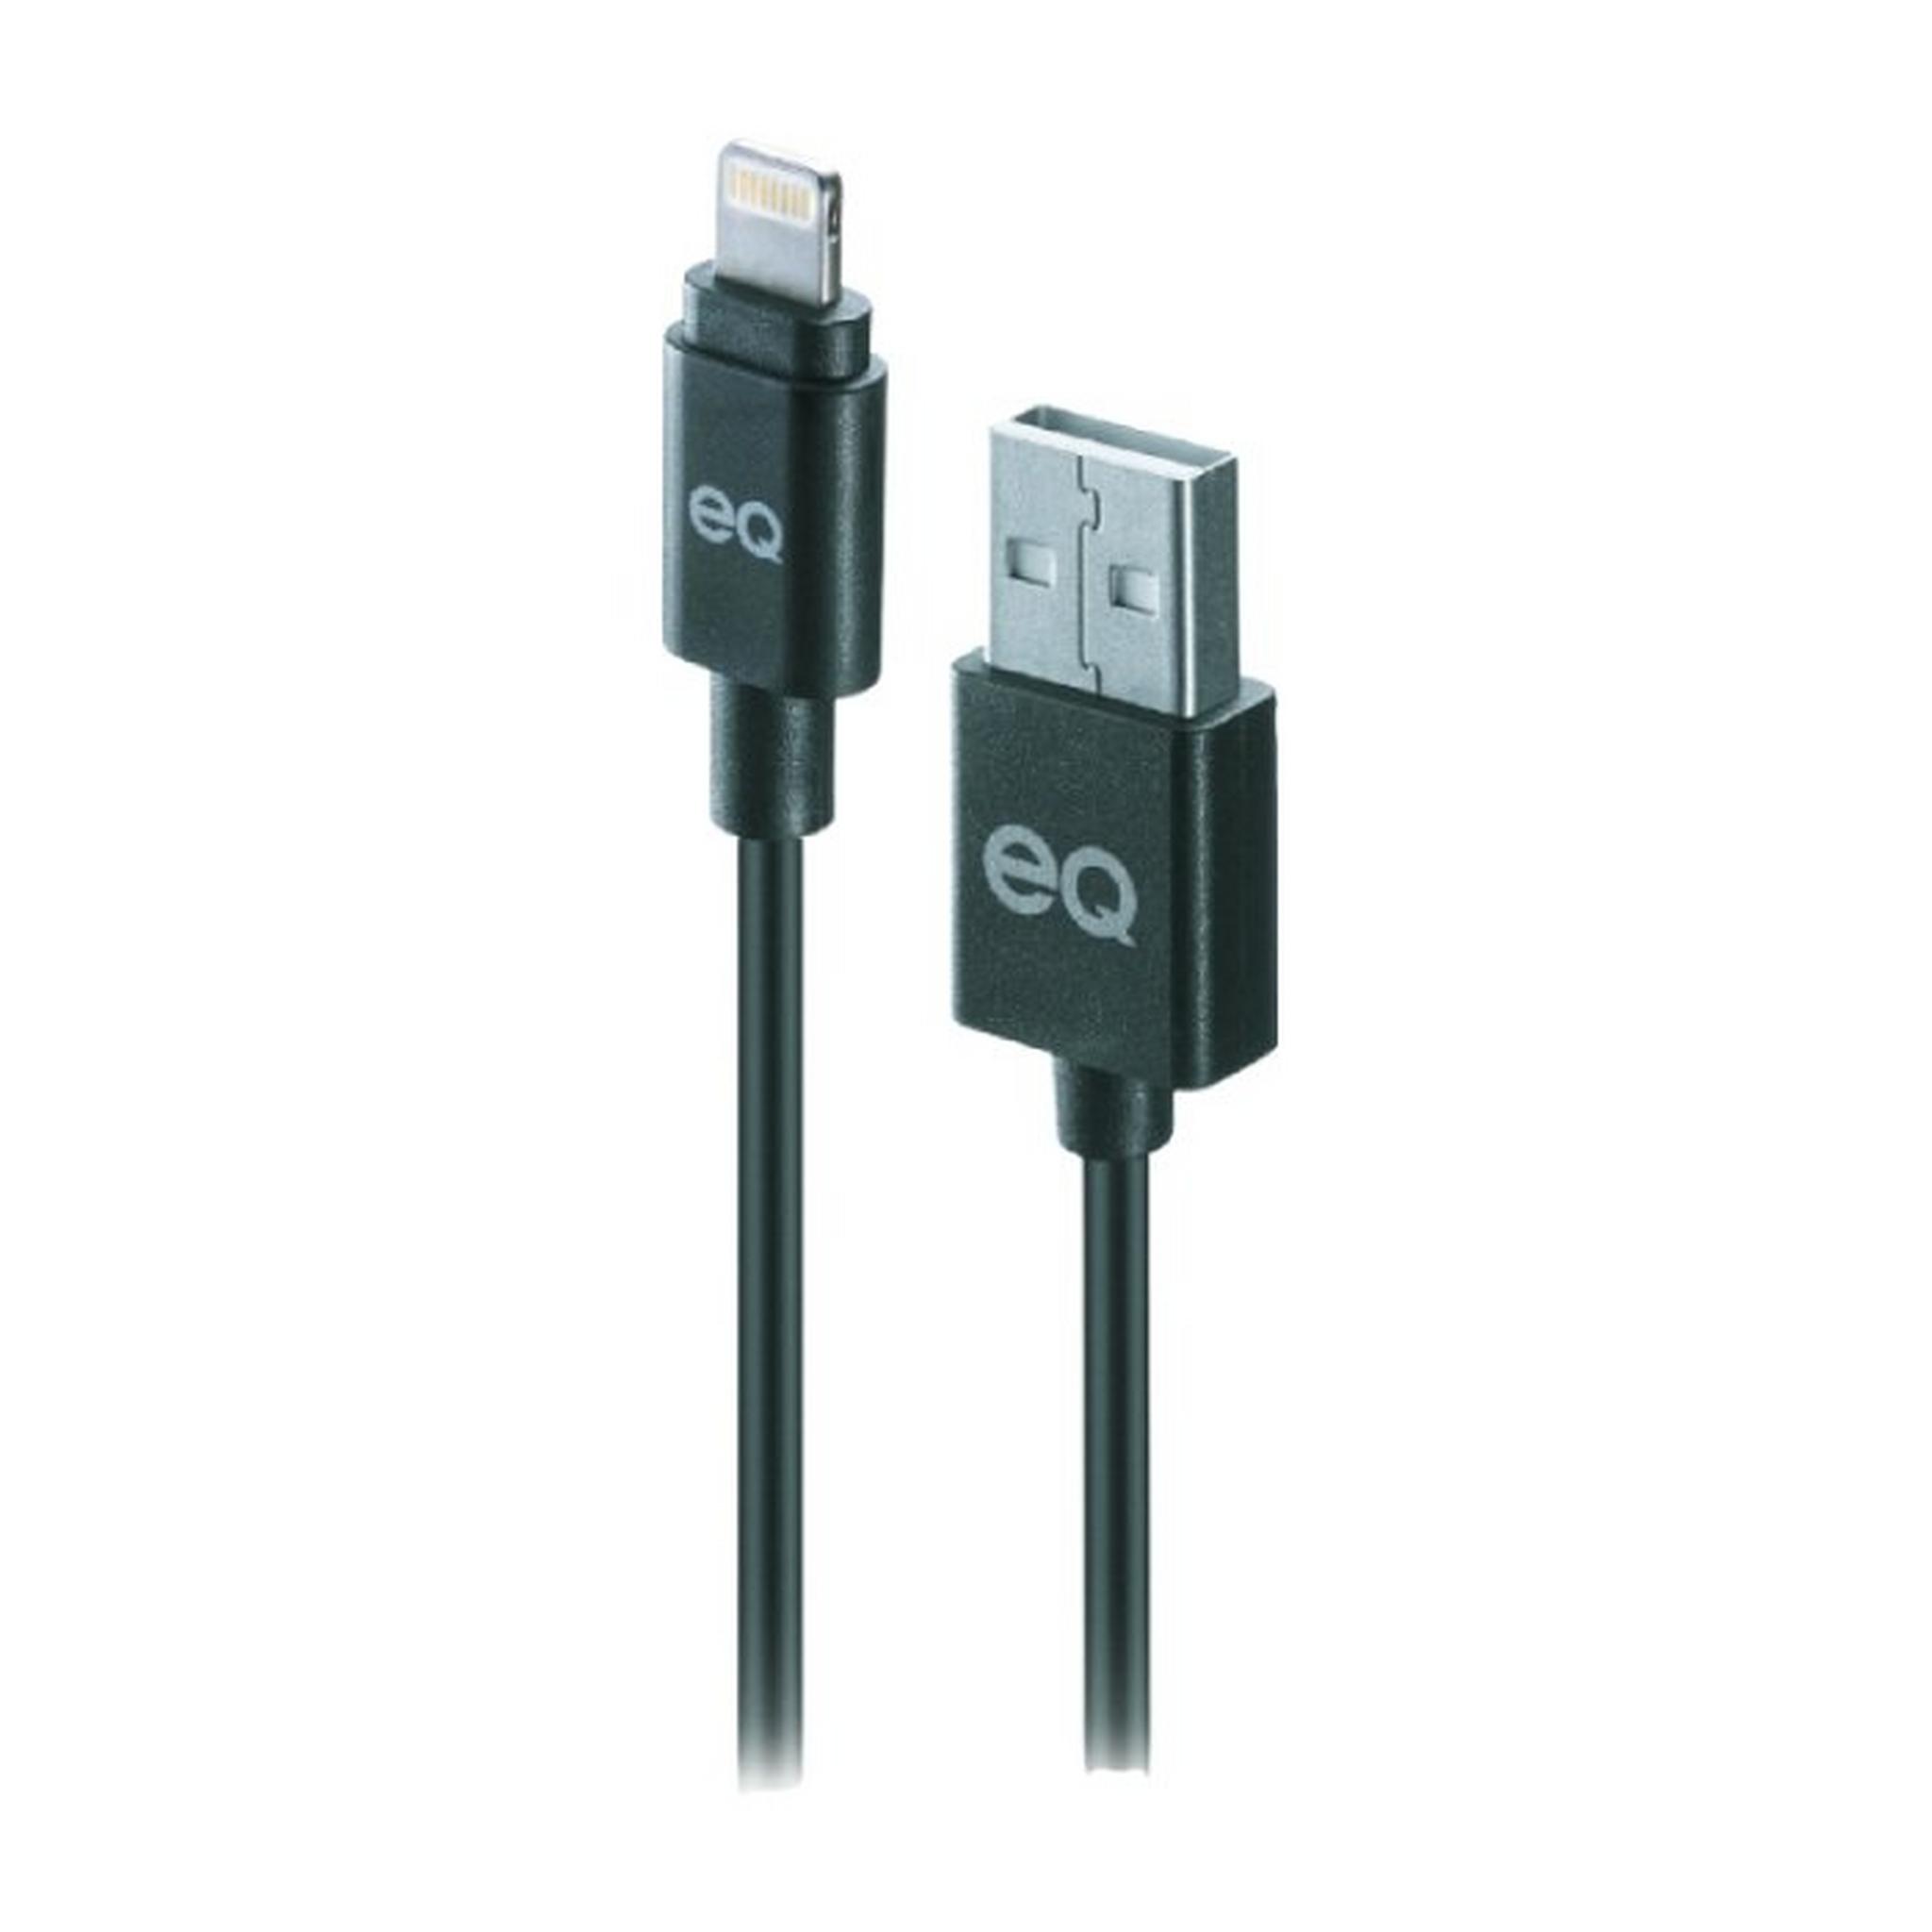 EQ Lightning Cable 1M - Black